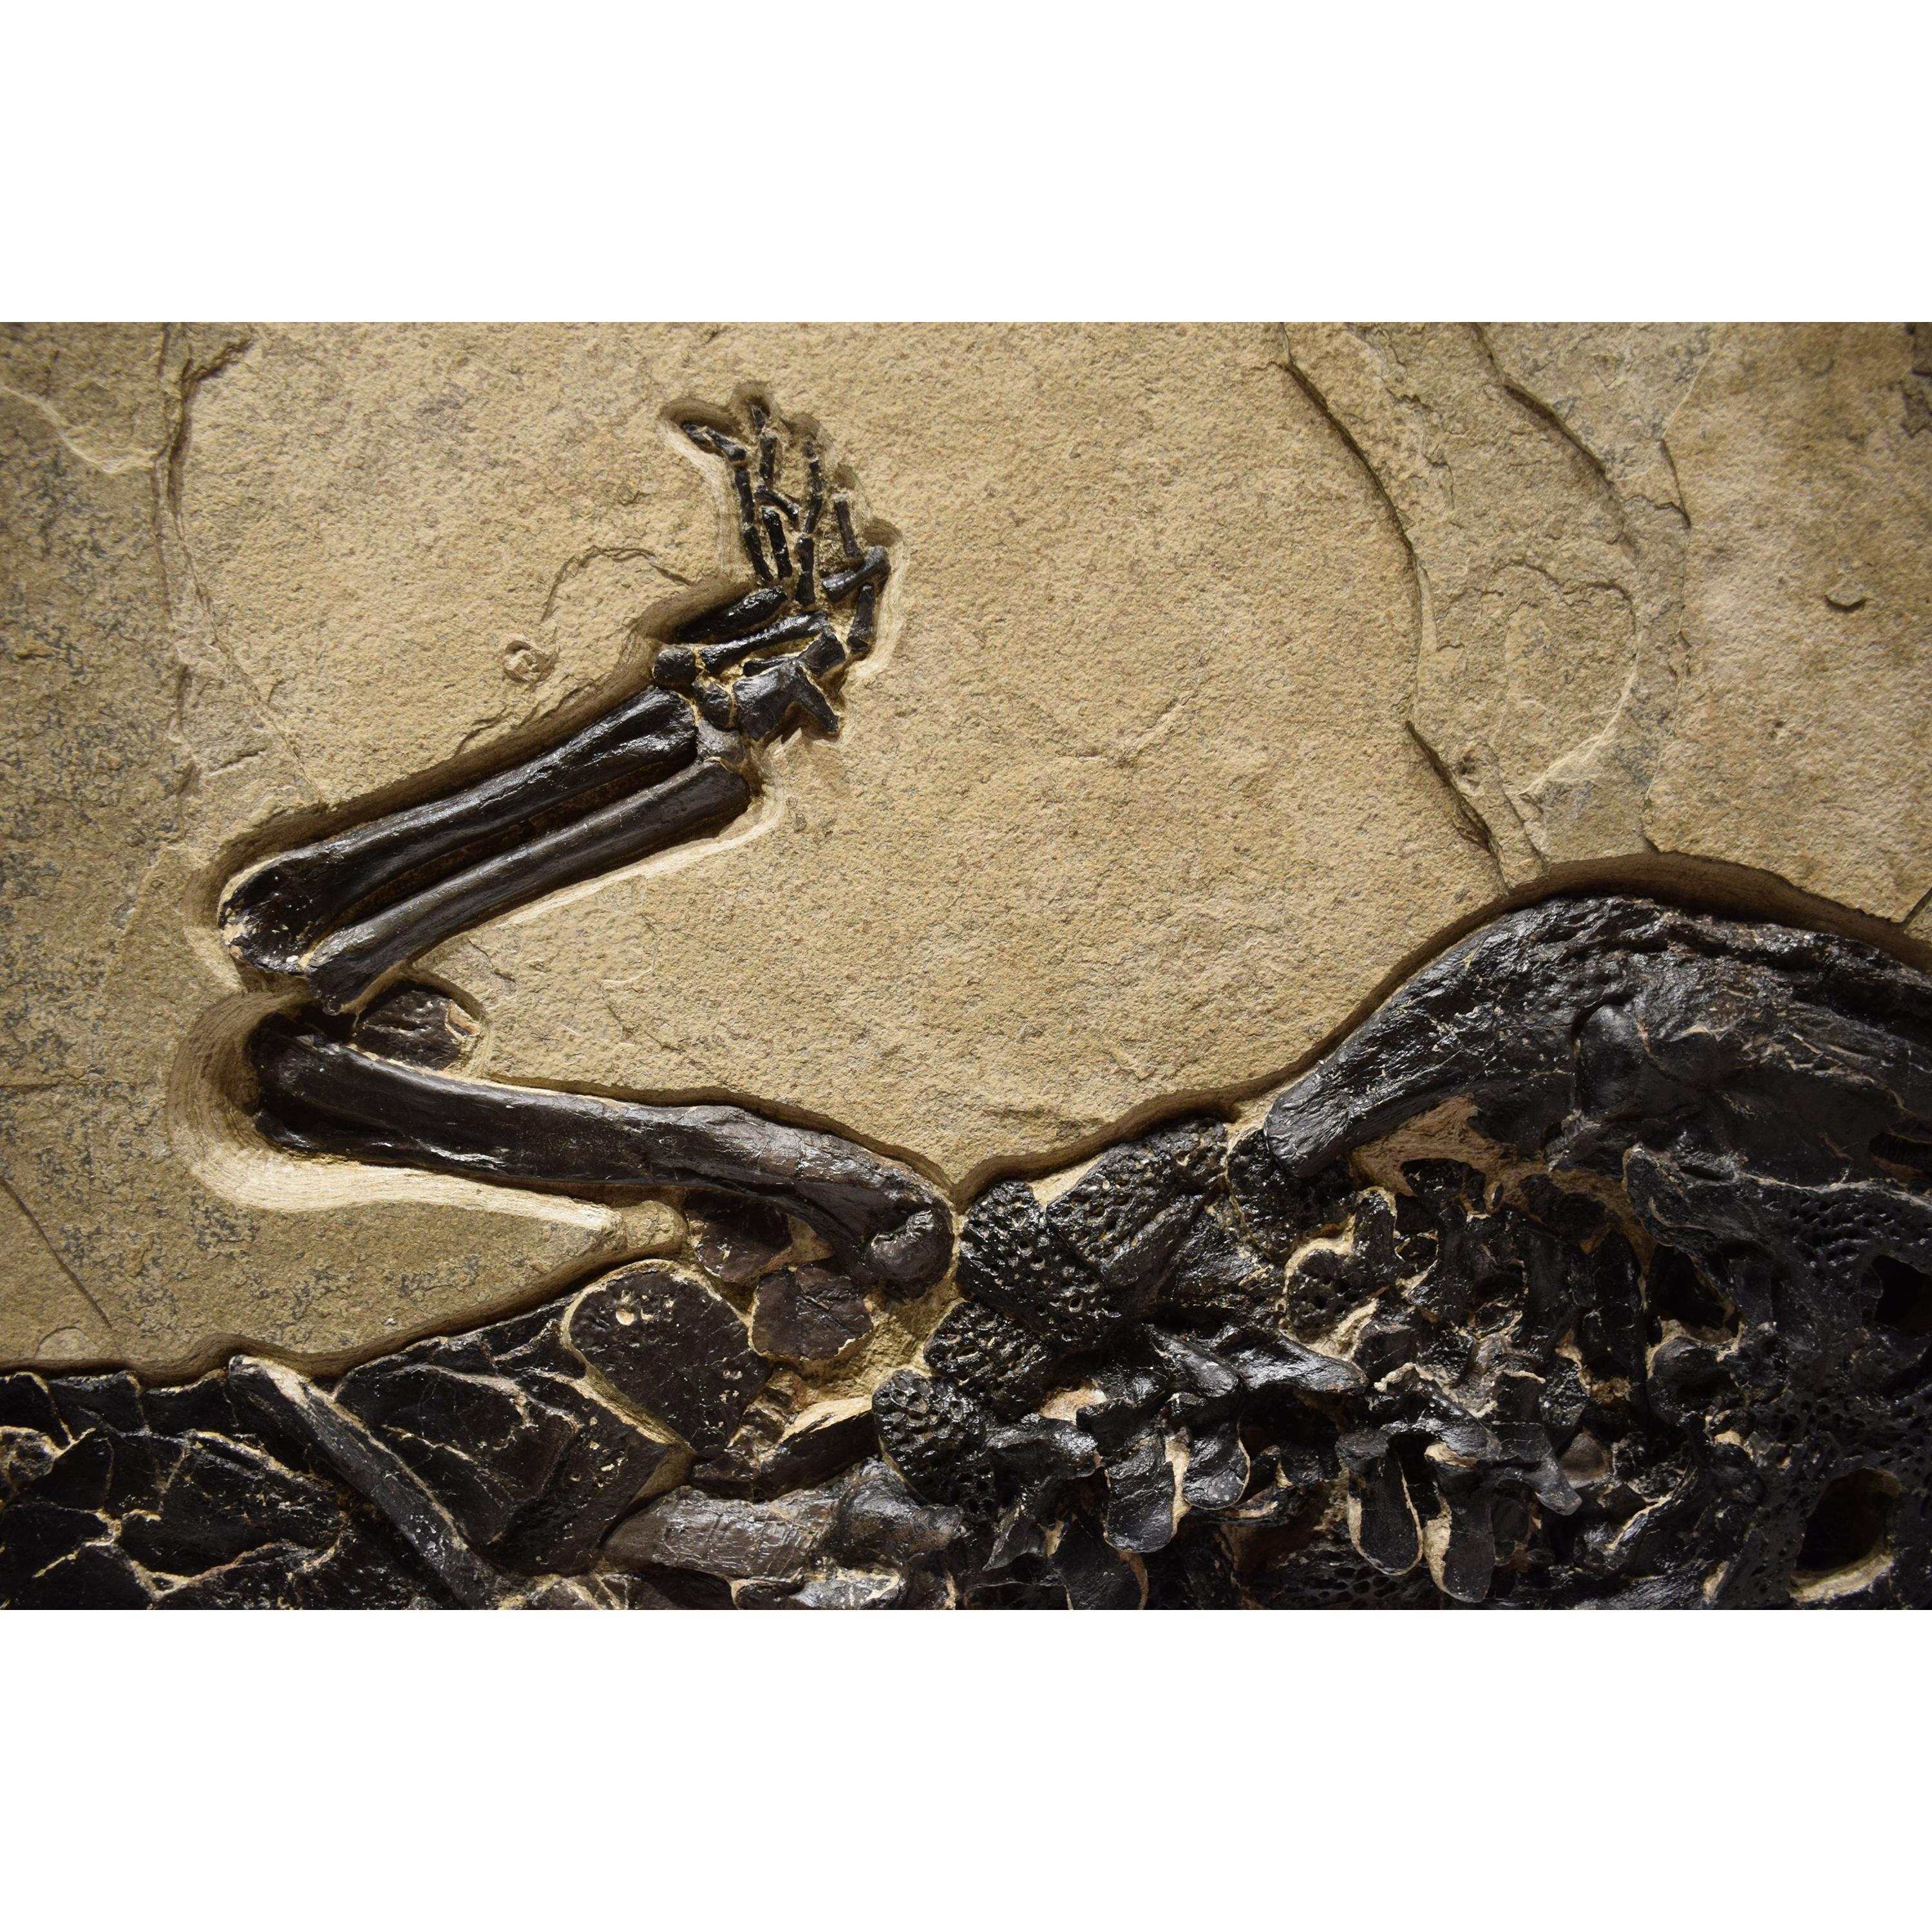 Contemporary 50 Million Year Old Eocene Era Fossil Crocodile Specimen in Stone, from Wyoming